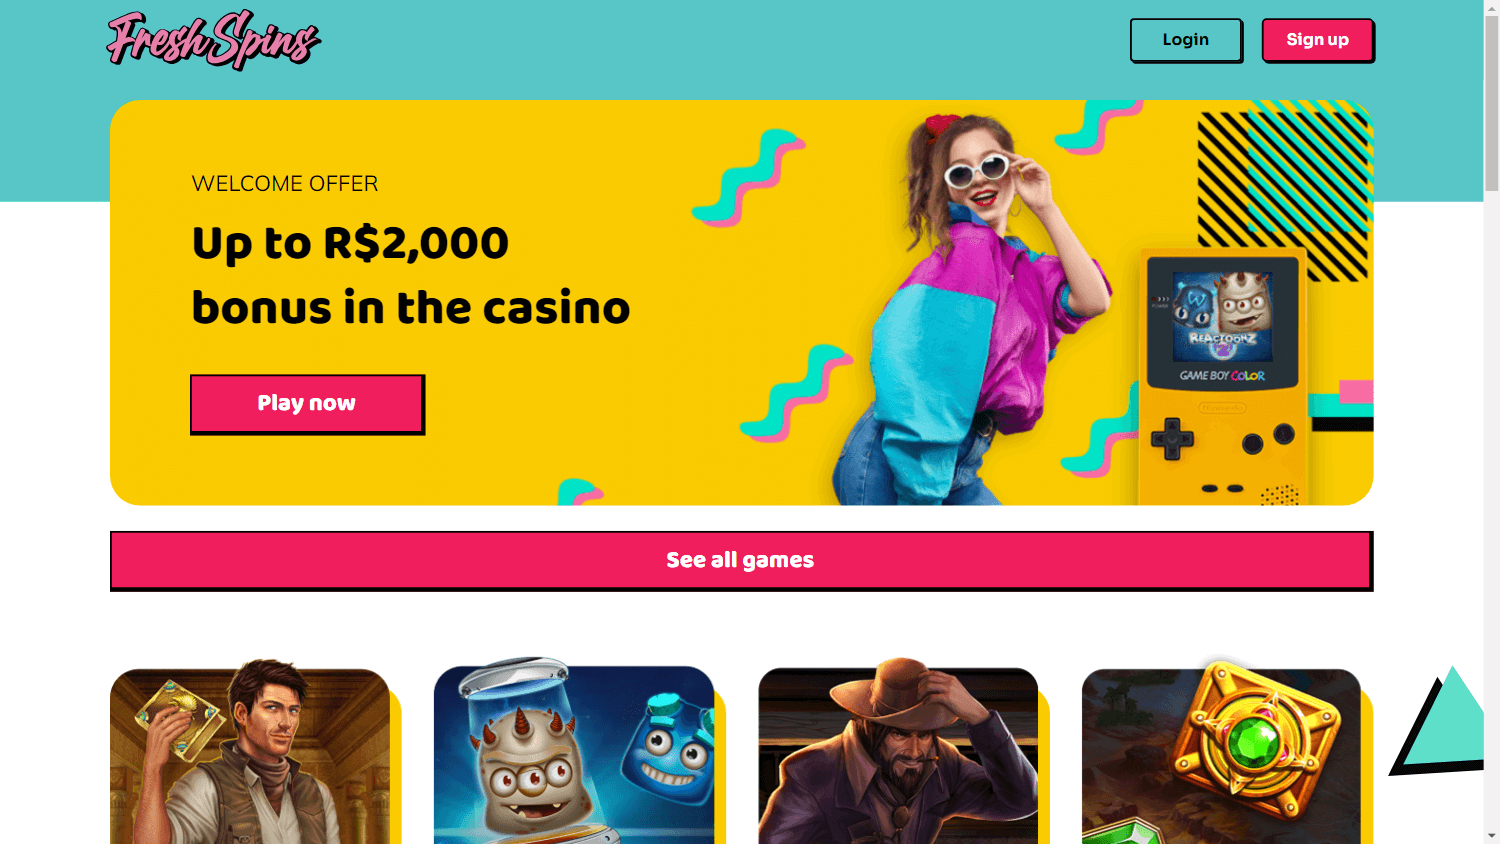 freshspins_casino_homepage_desktop